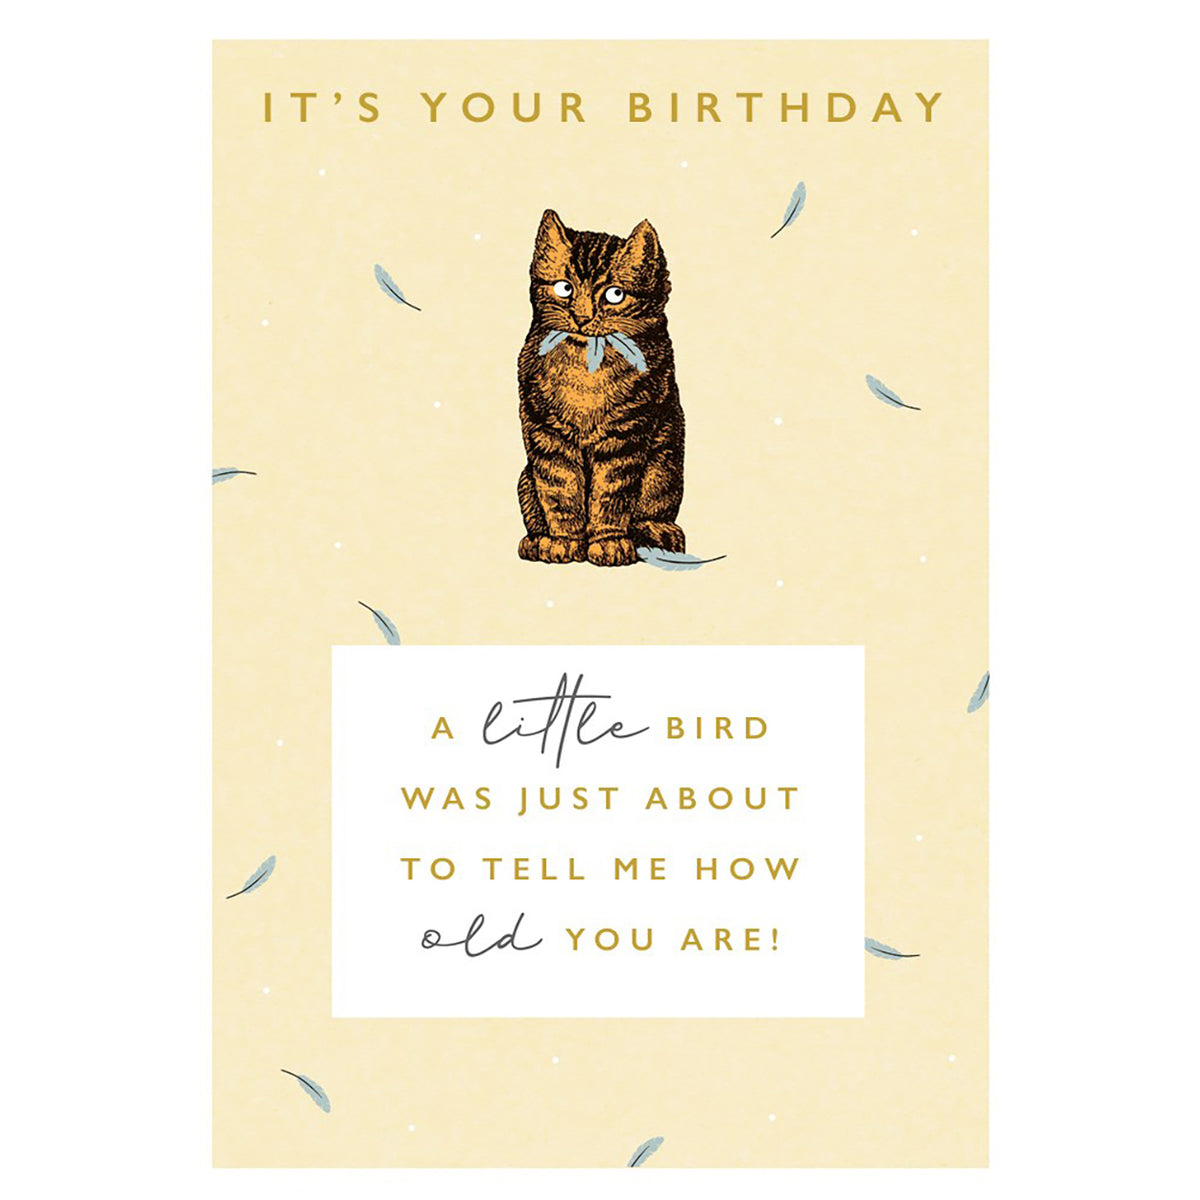 A Little Bird Birthday Card